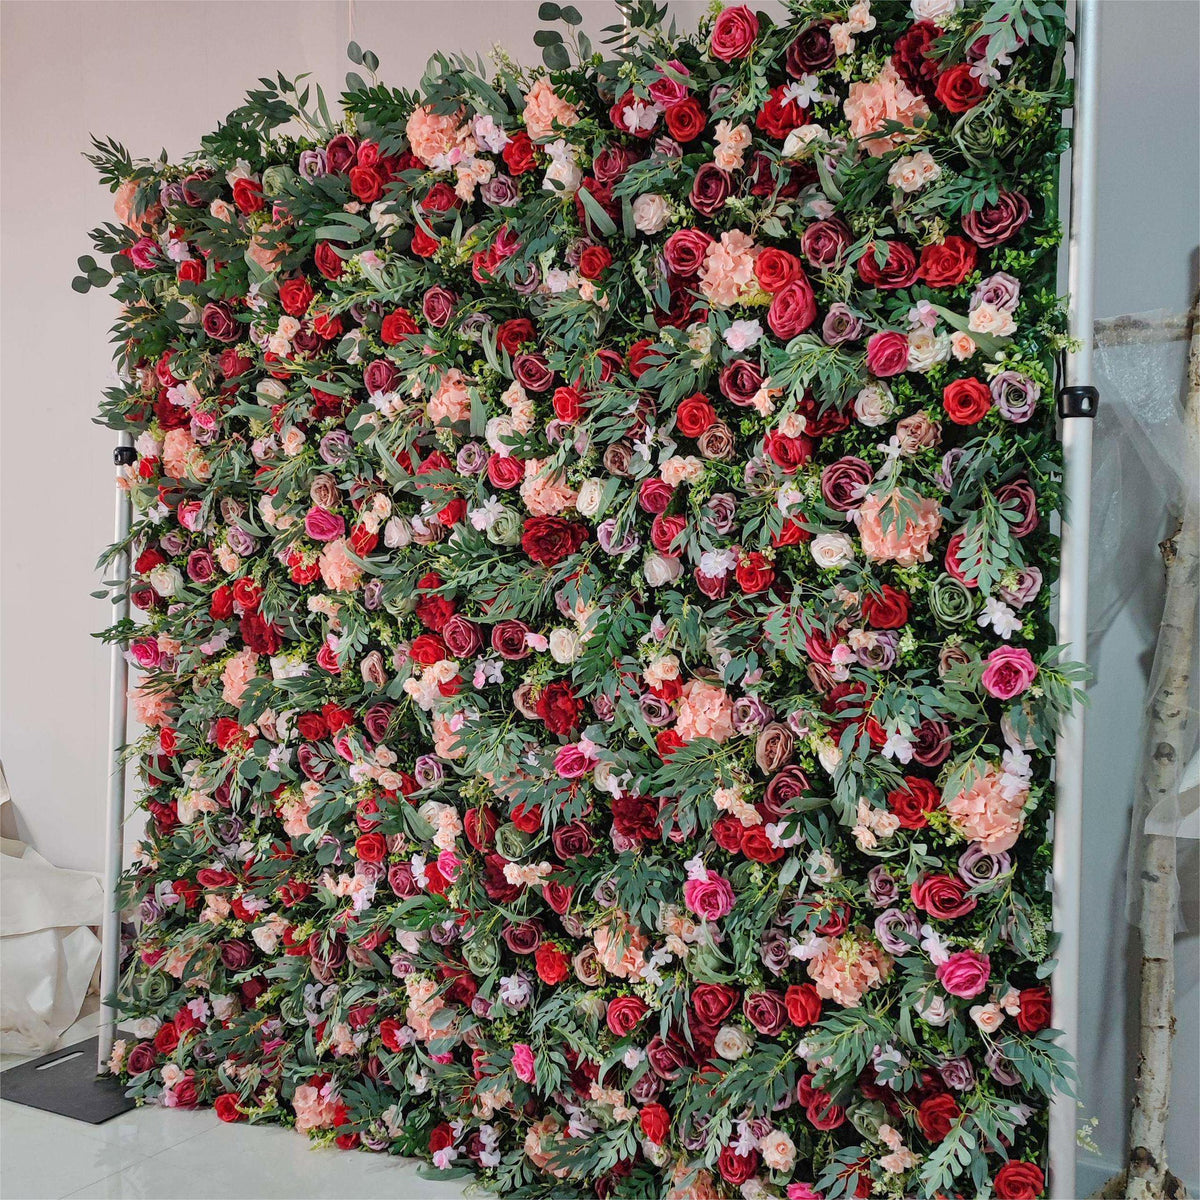 3D Artificial Flower Wall Arrangement Wedding Party Birthday Backdrop Decor HQ3738